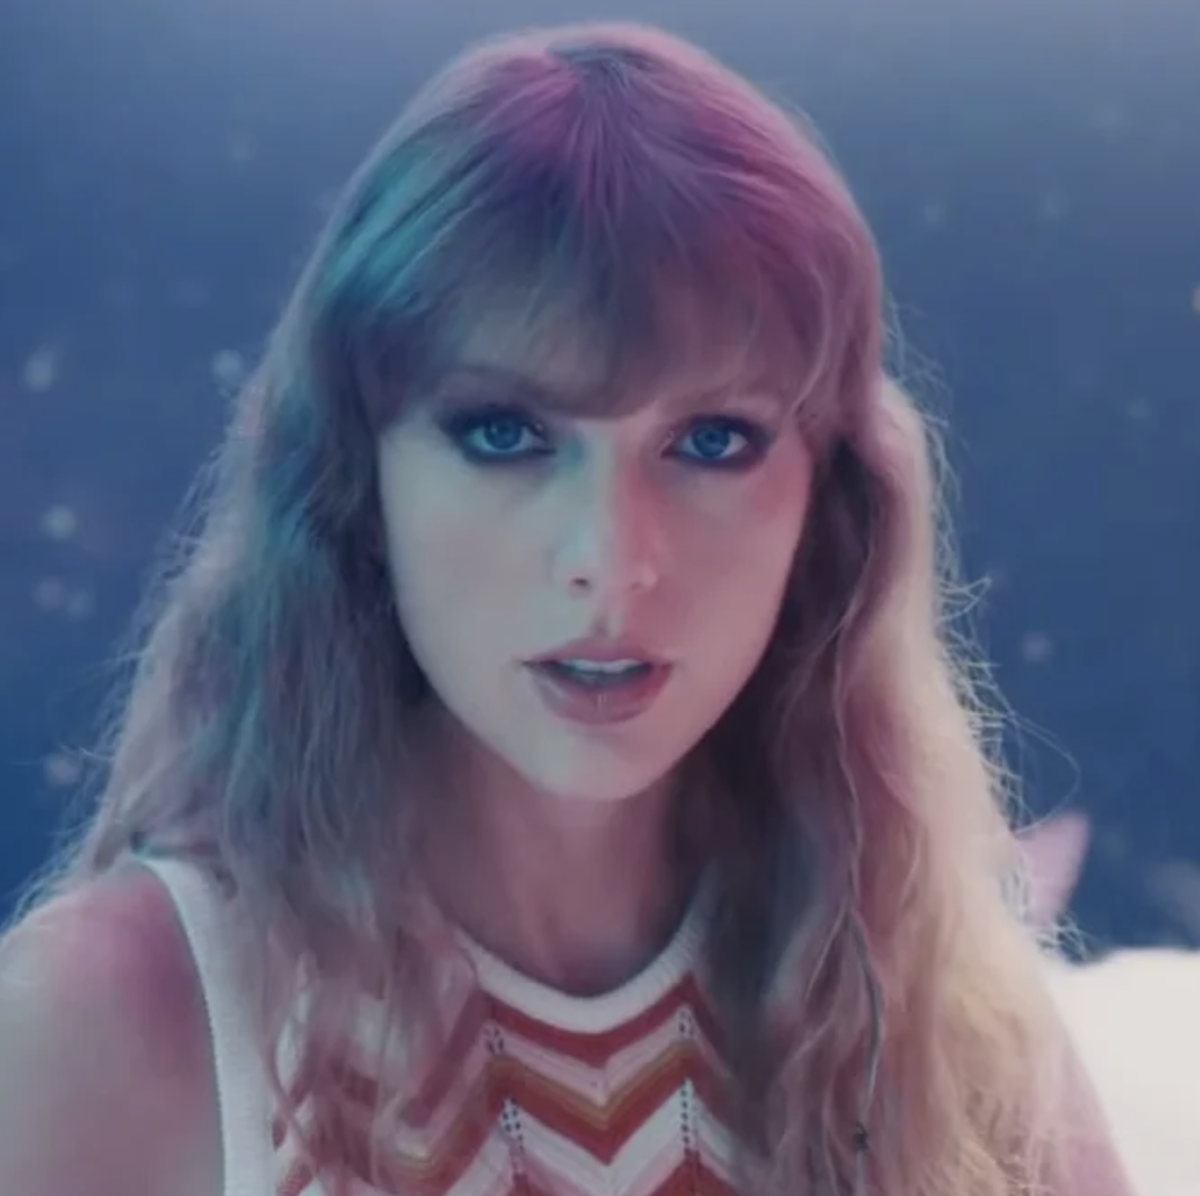 What Taylor Swift's Lavender Haze Lyrics Mean